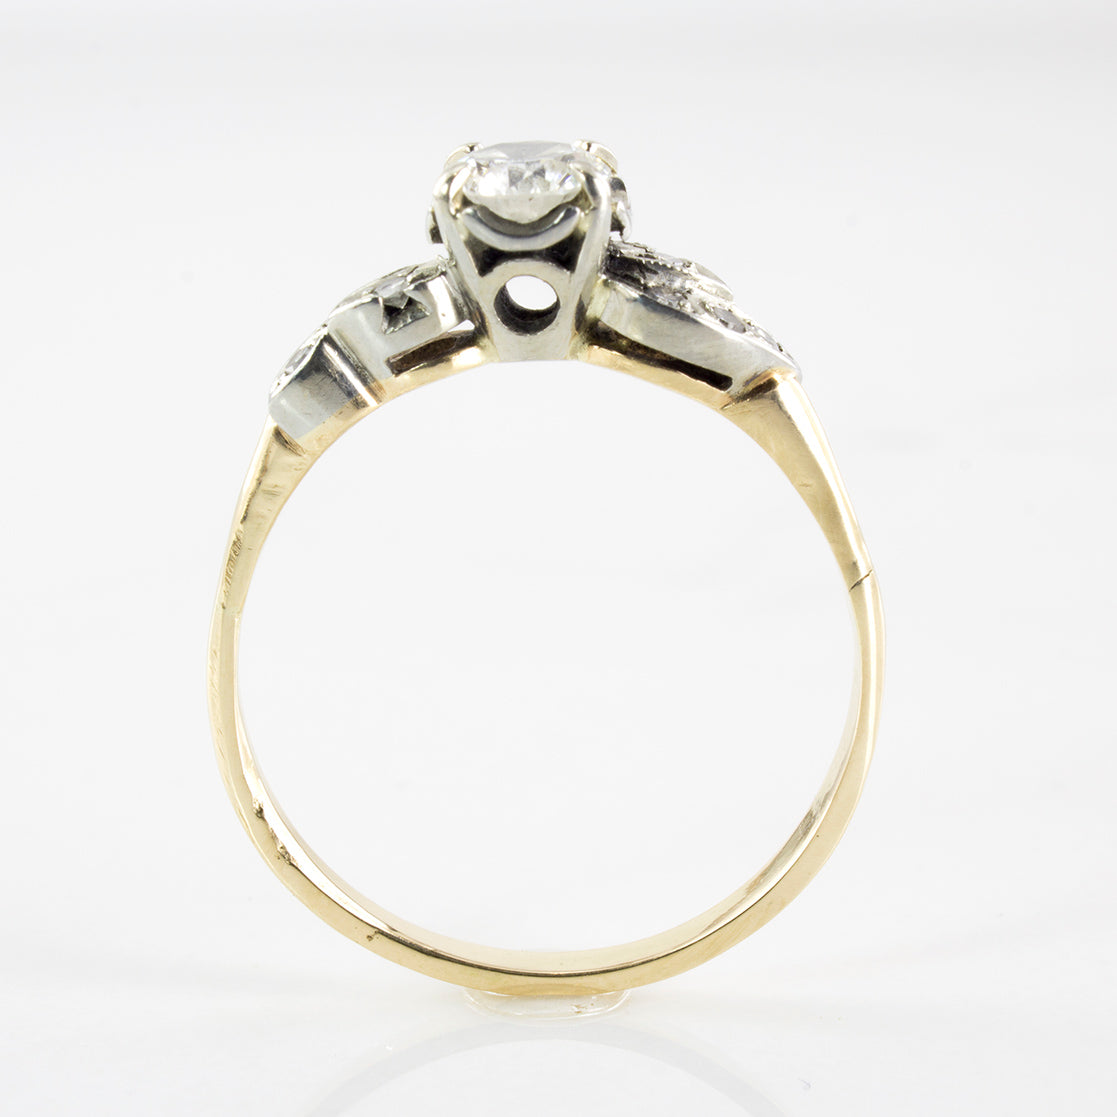 1940's Diamond Engagement Ring | 0.49 ctw | SZ 8.25 |